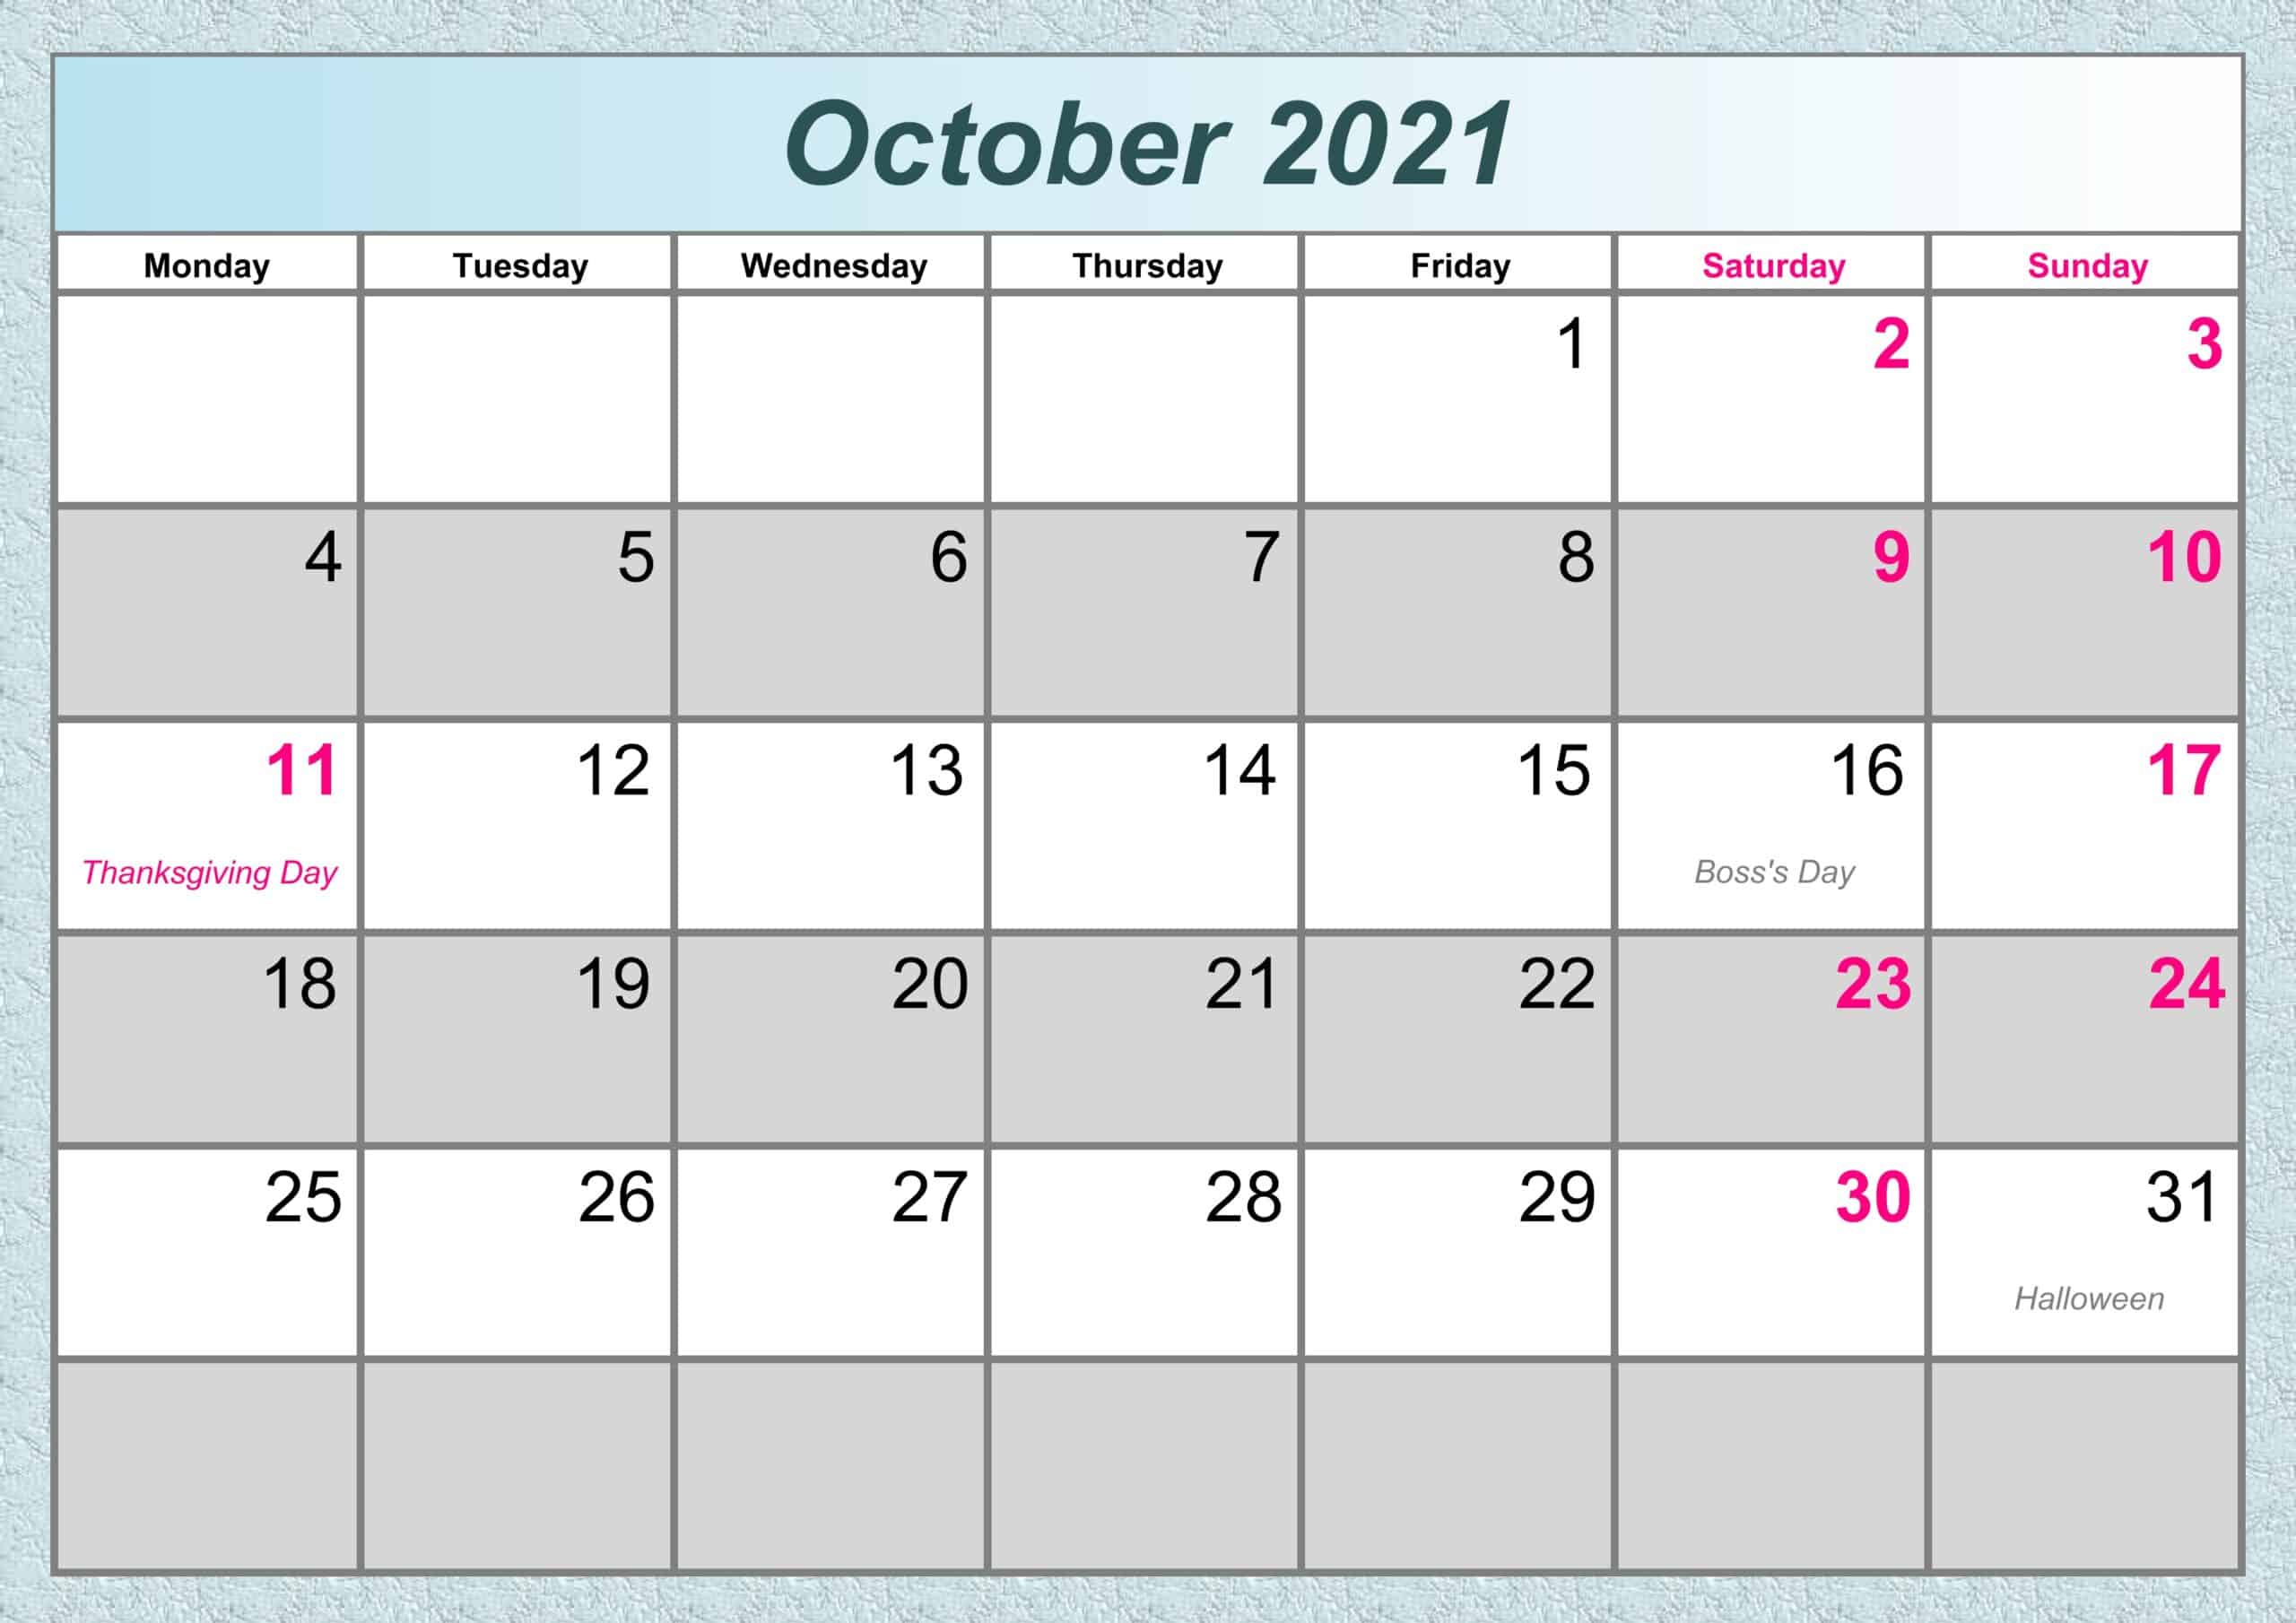 Monthly Octoeber 2021 Calendar Word